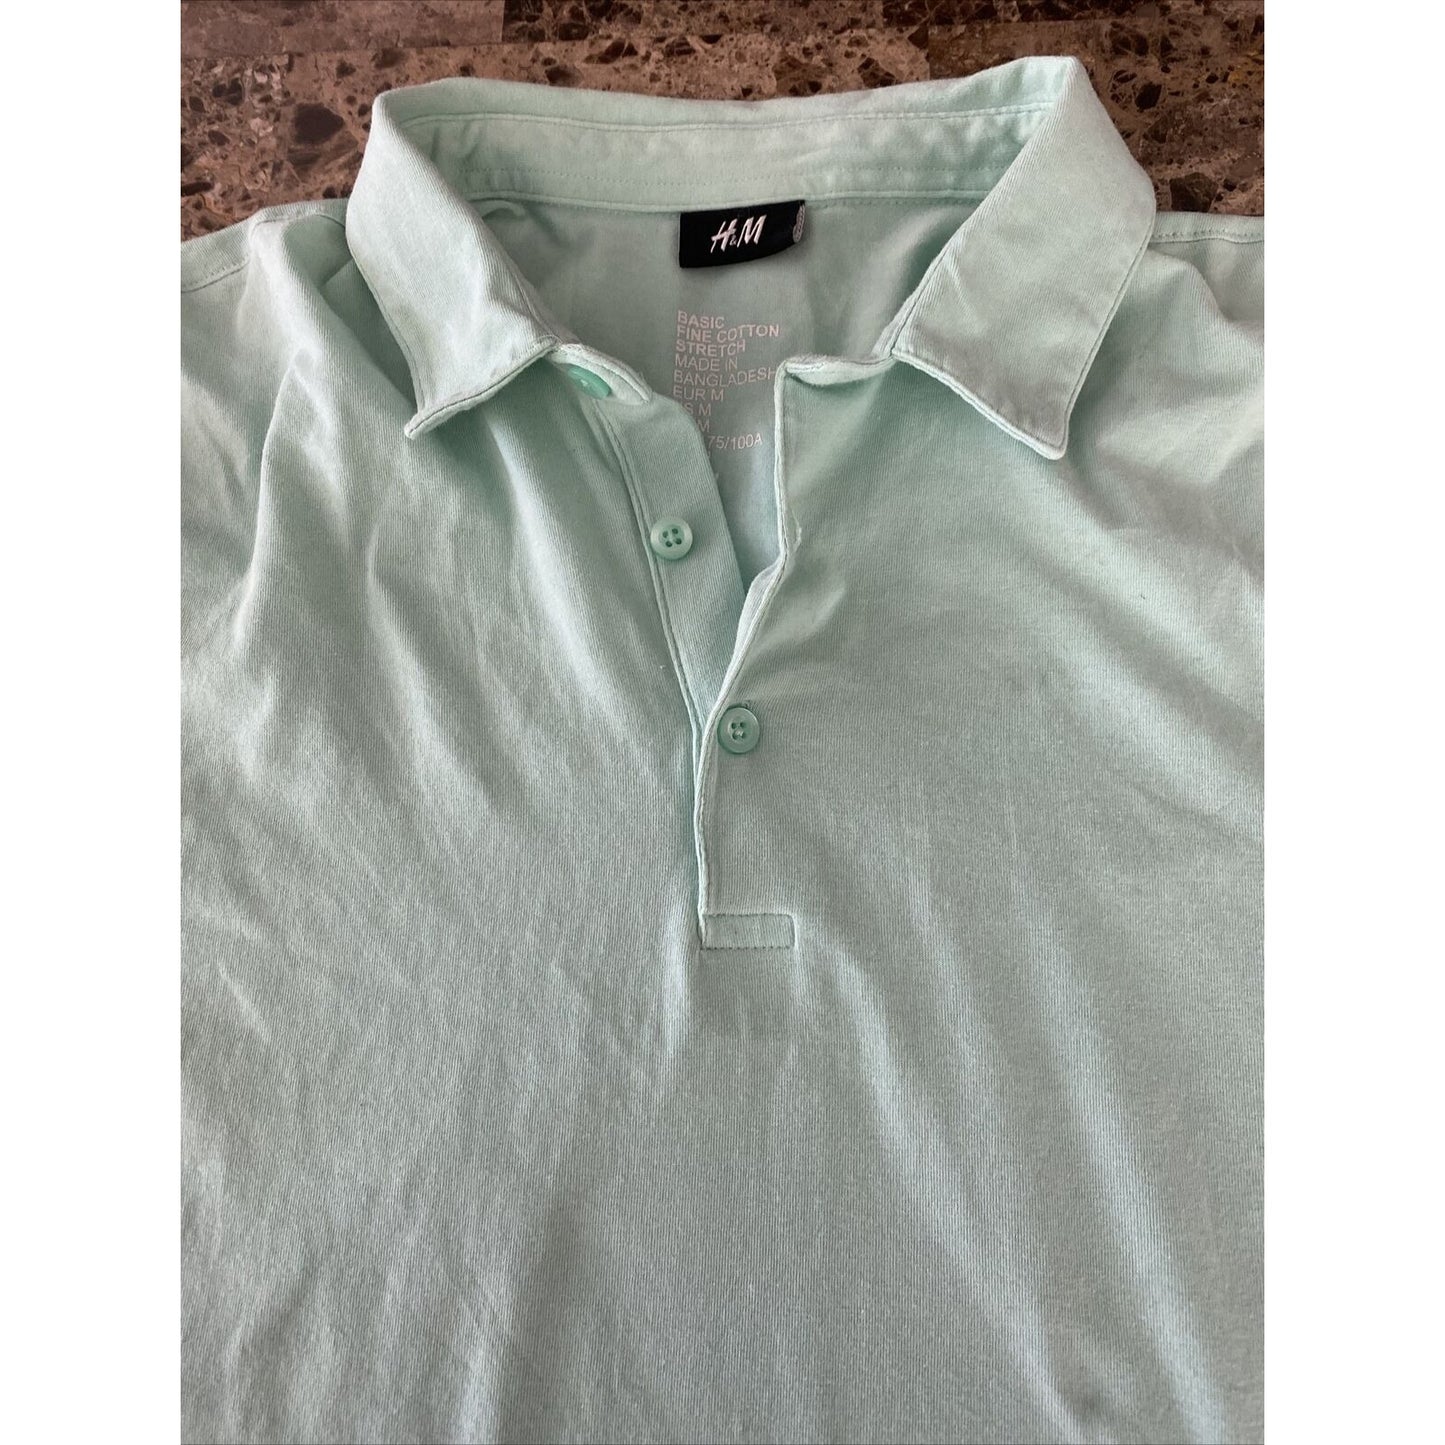 H&M Basic Fine Cotton Stretch Men's Medium Mint Green Polo Shirt